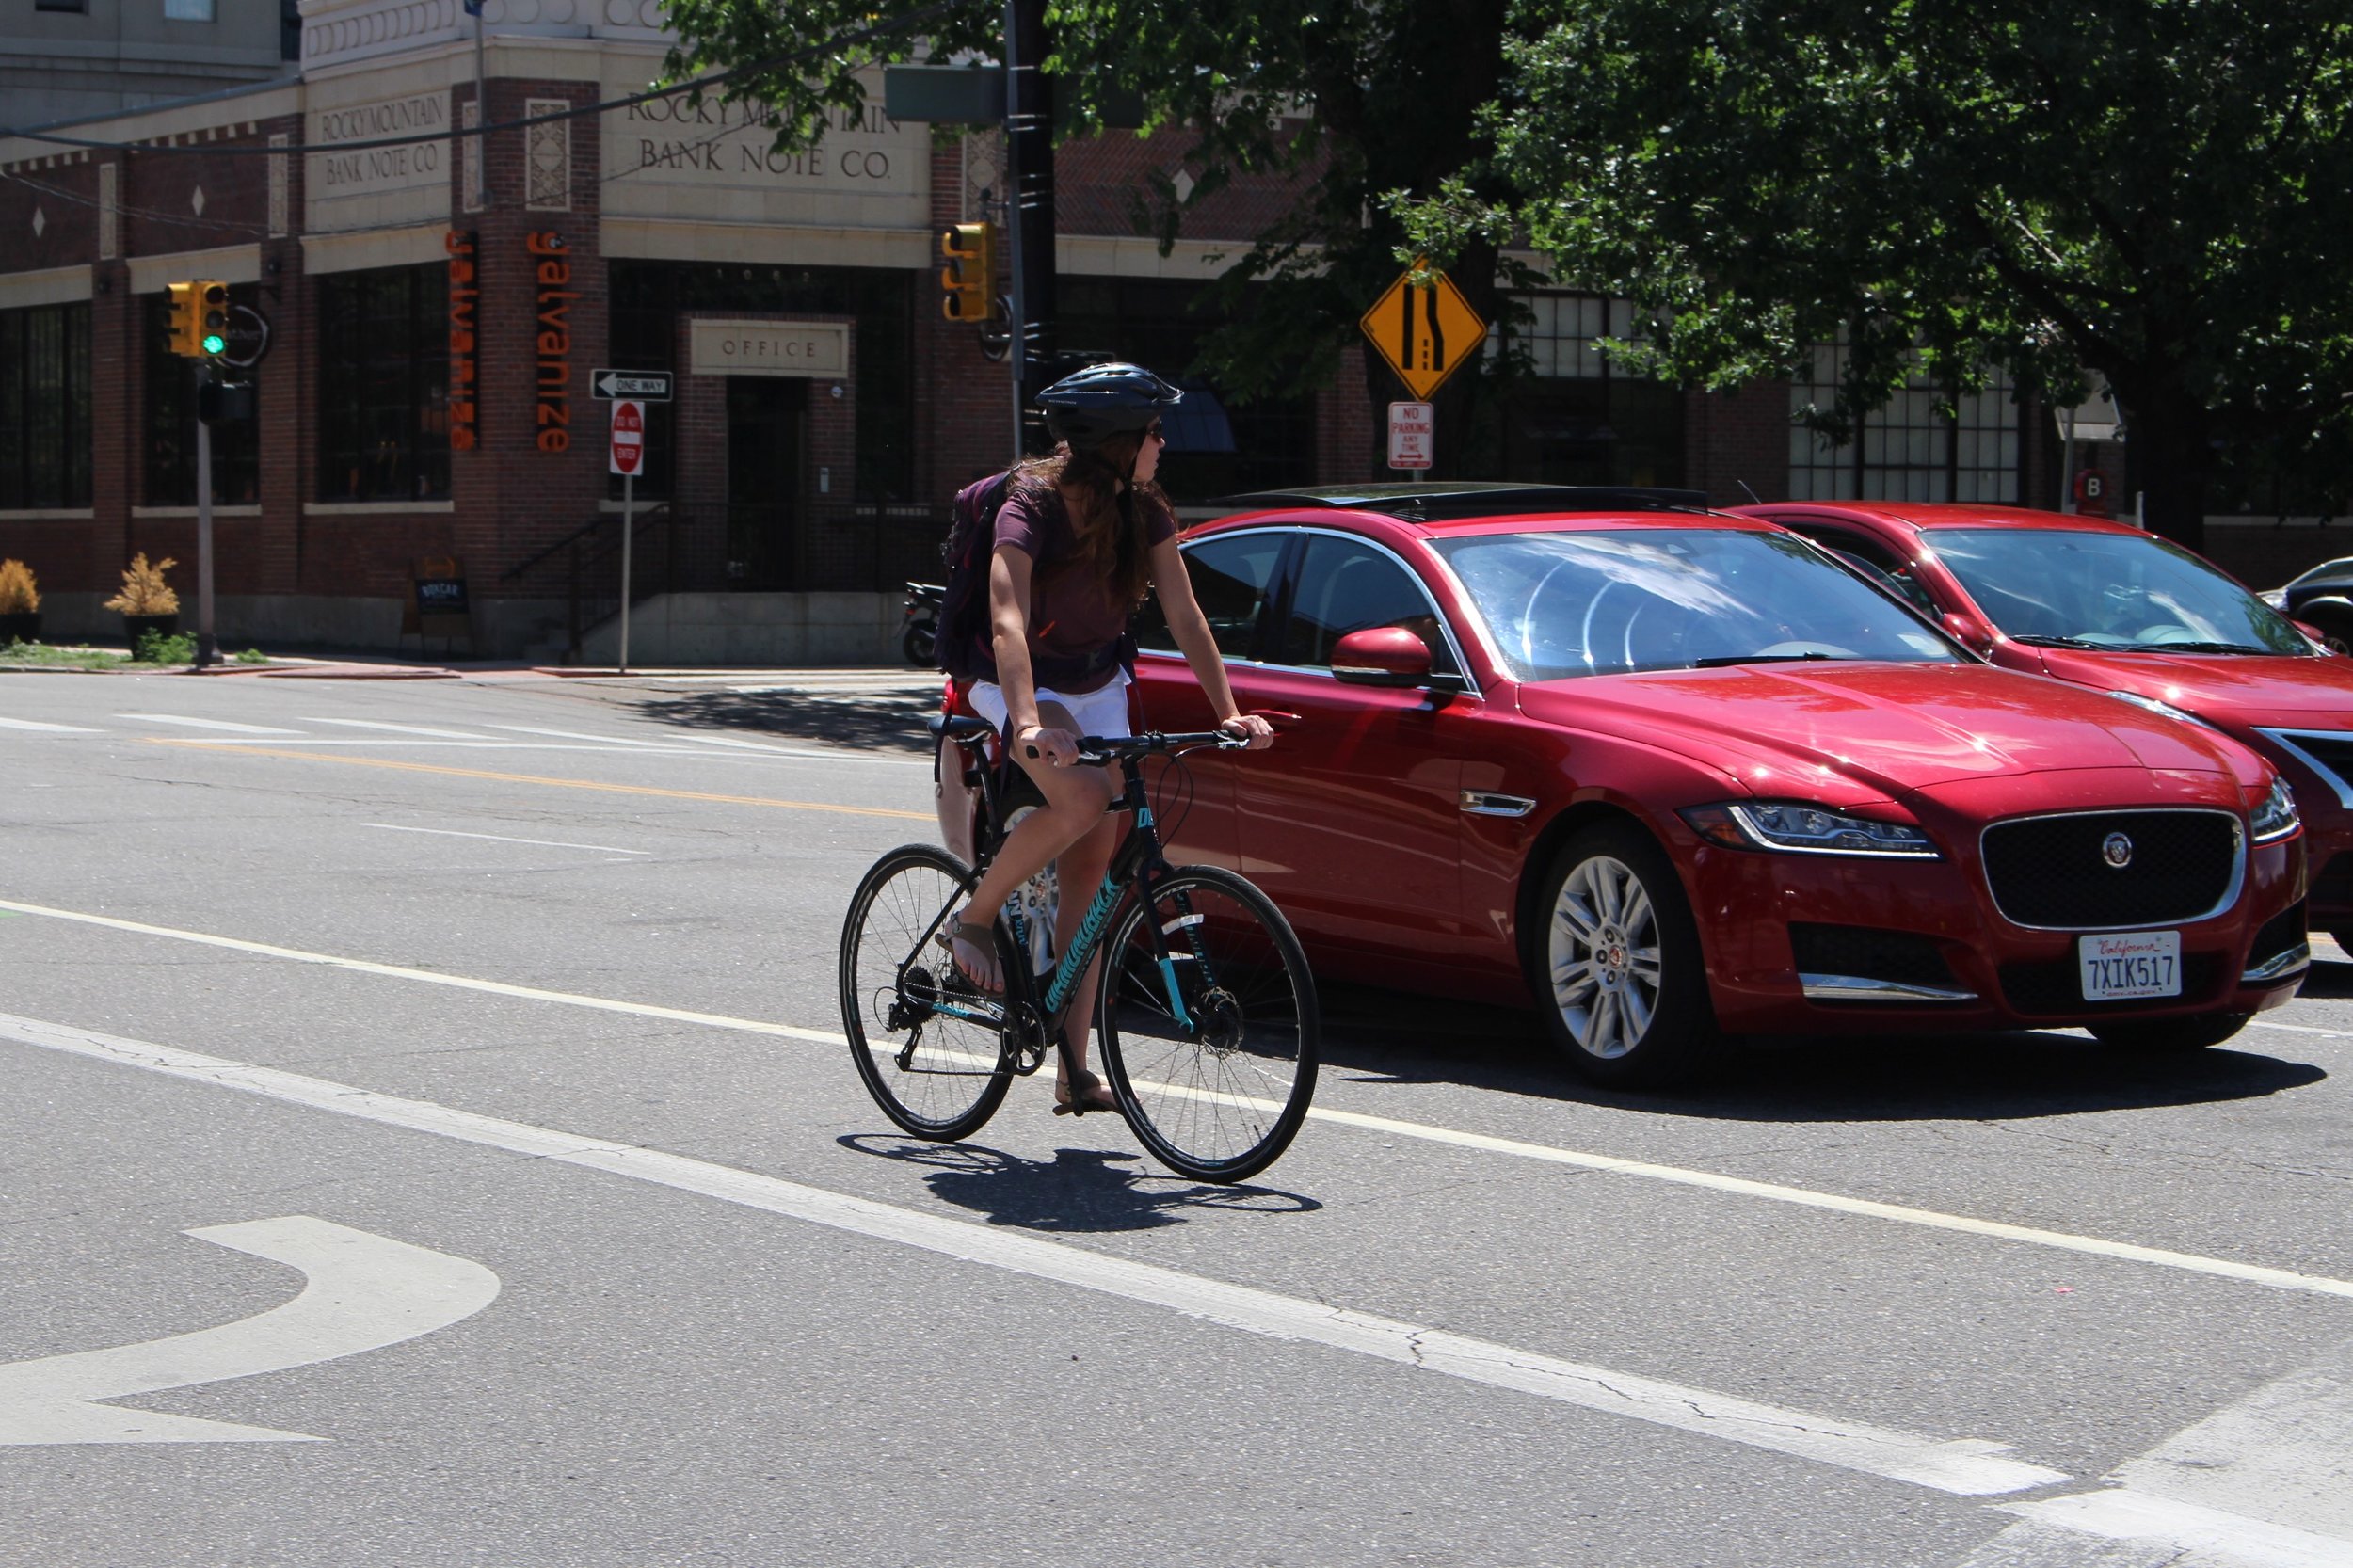 Cyclist in bike lane.jpg